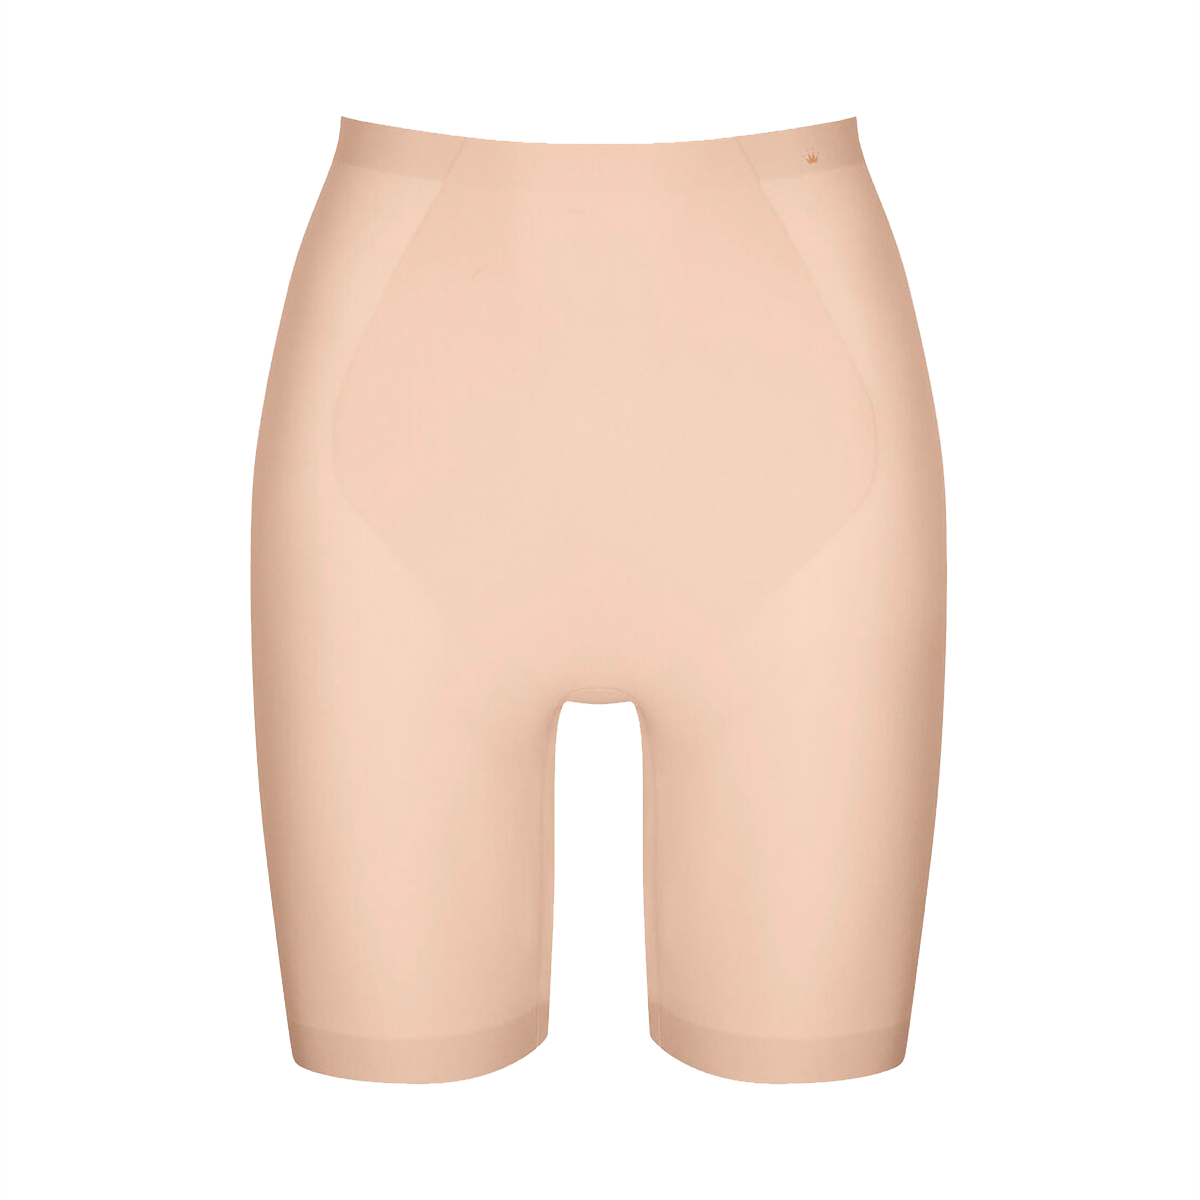 #3 - Triumph Medium Shaping Series Shorts, Farve: Beige, Størrelse: XL, Dame